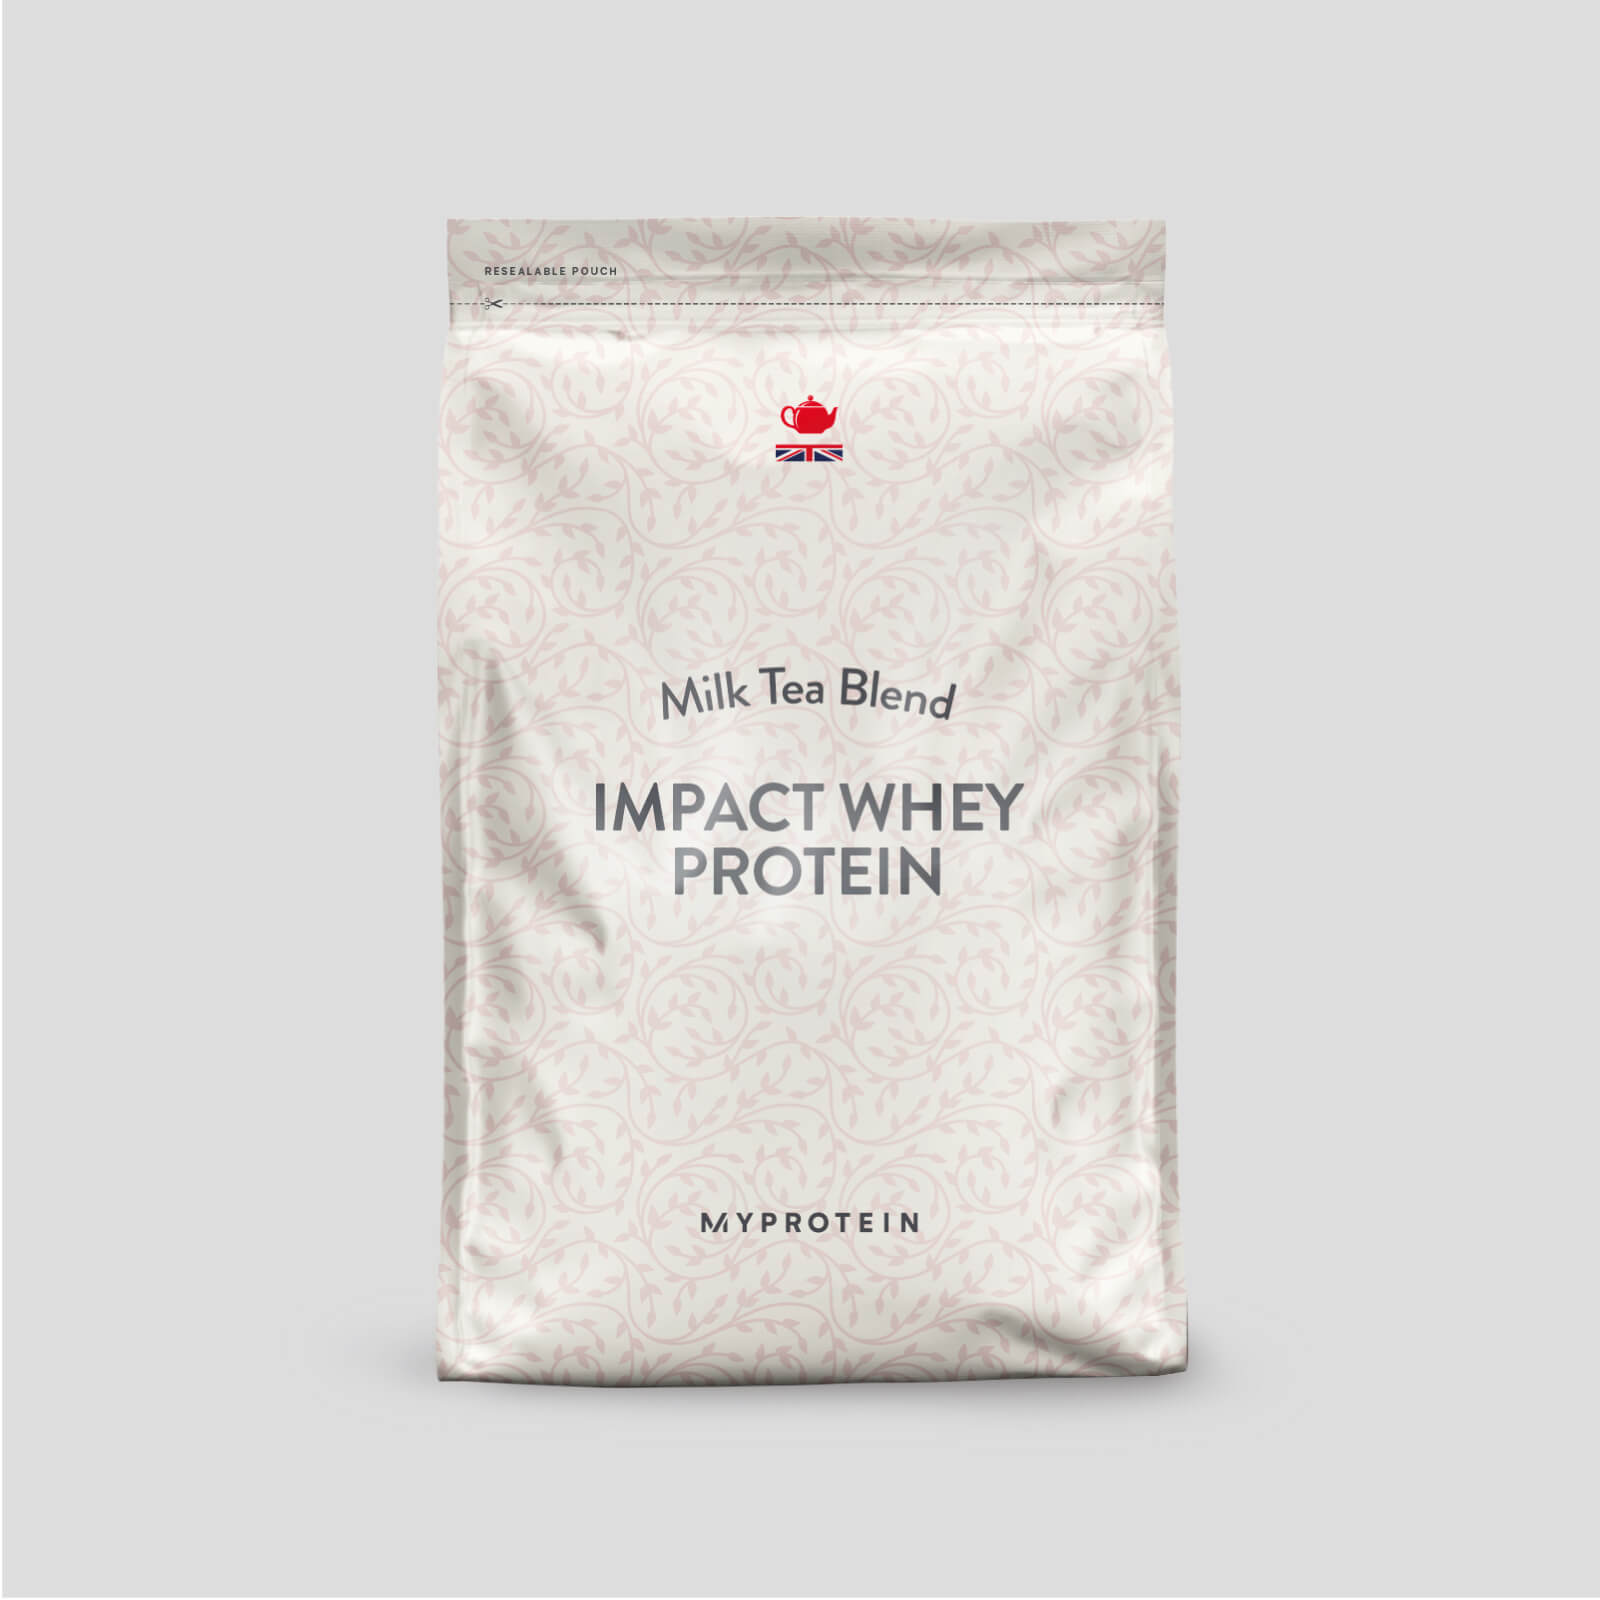 Impact Whey Protein - รสชานม (Milk Tea) - 1kg - Milk Tea